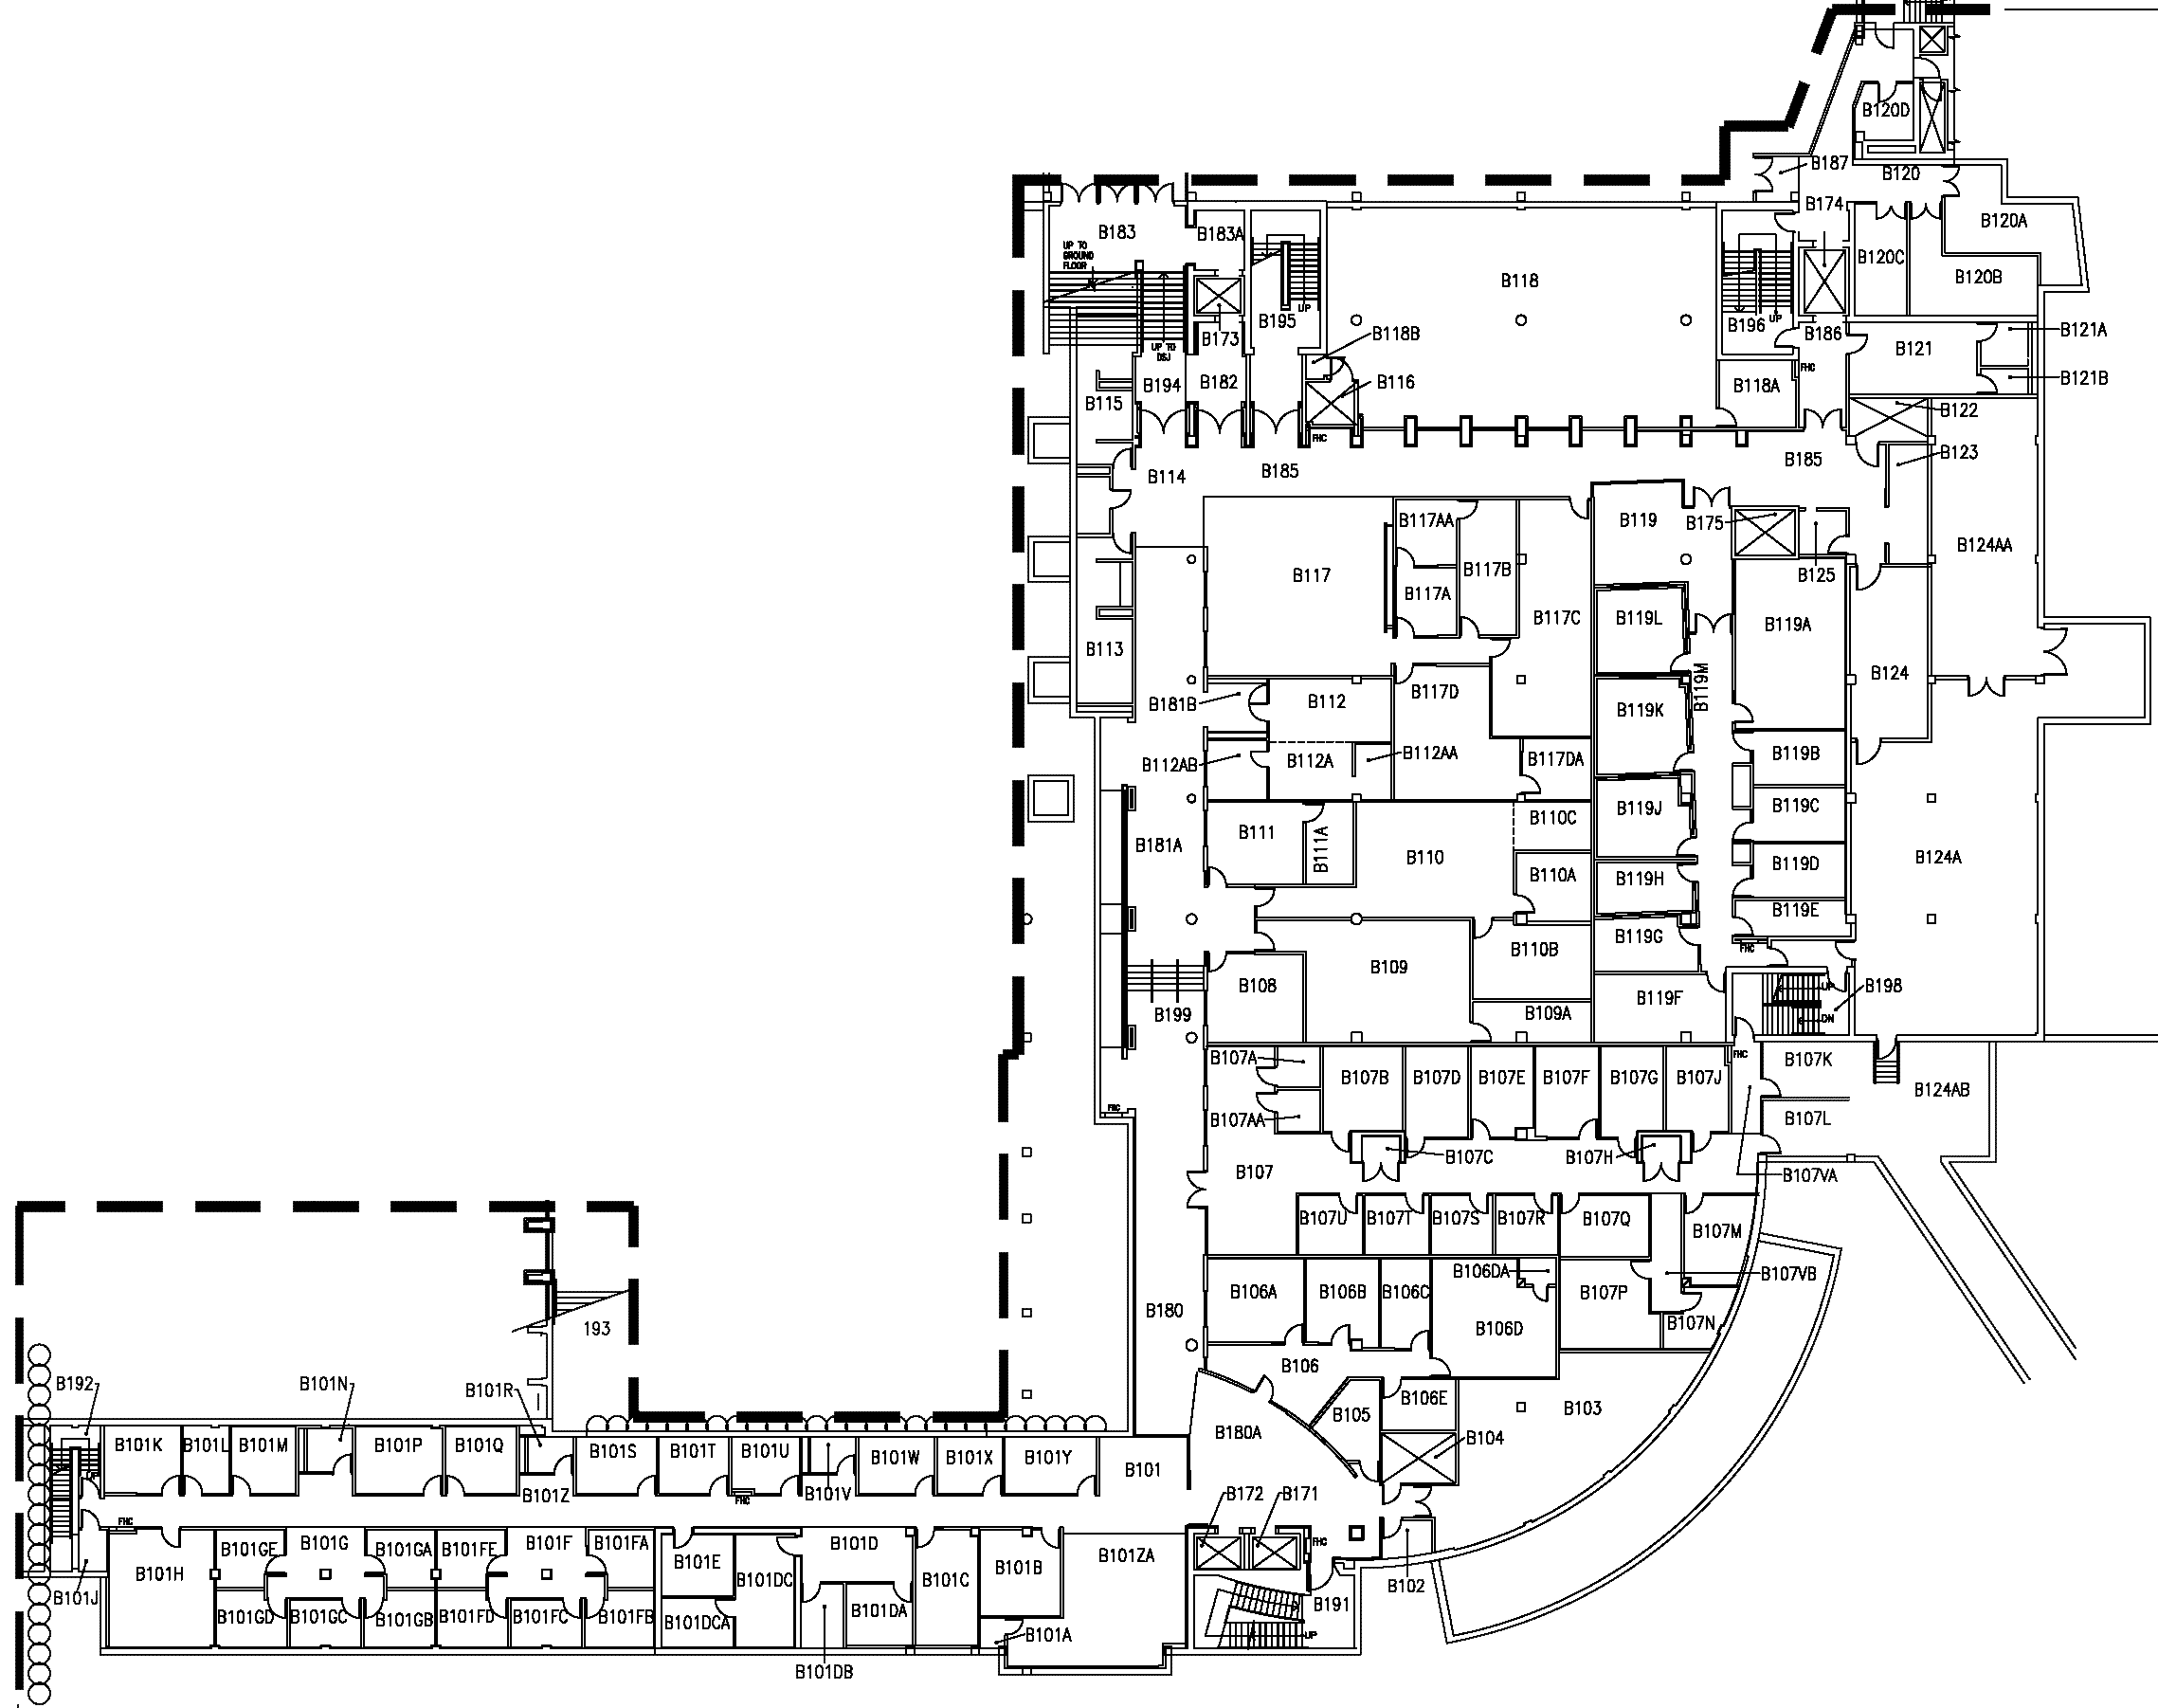 McMaster University Student Center (MUSC) - Basement Floor Map